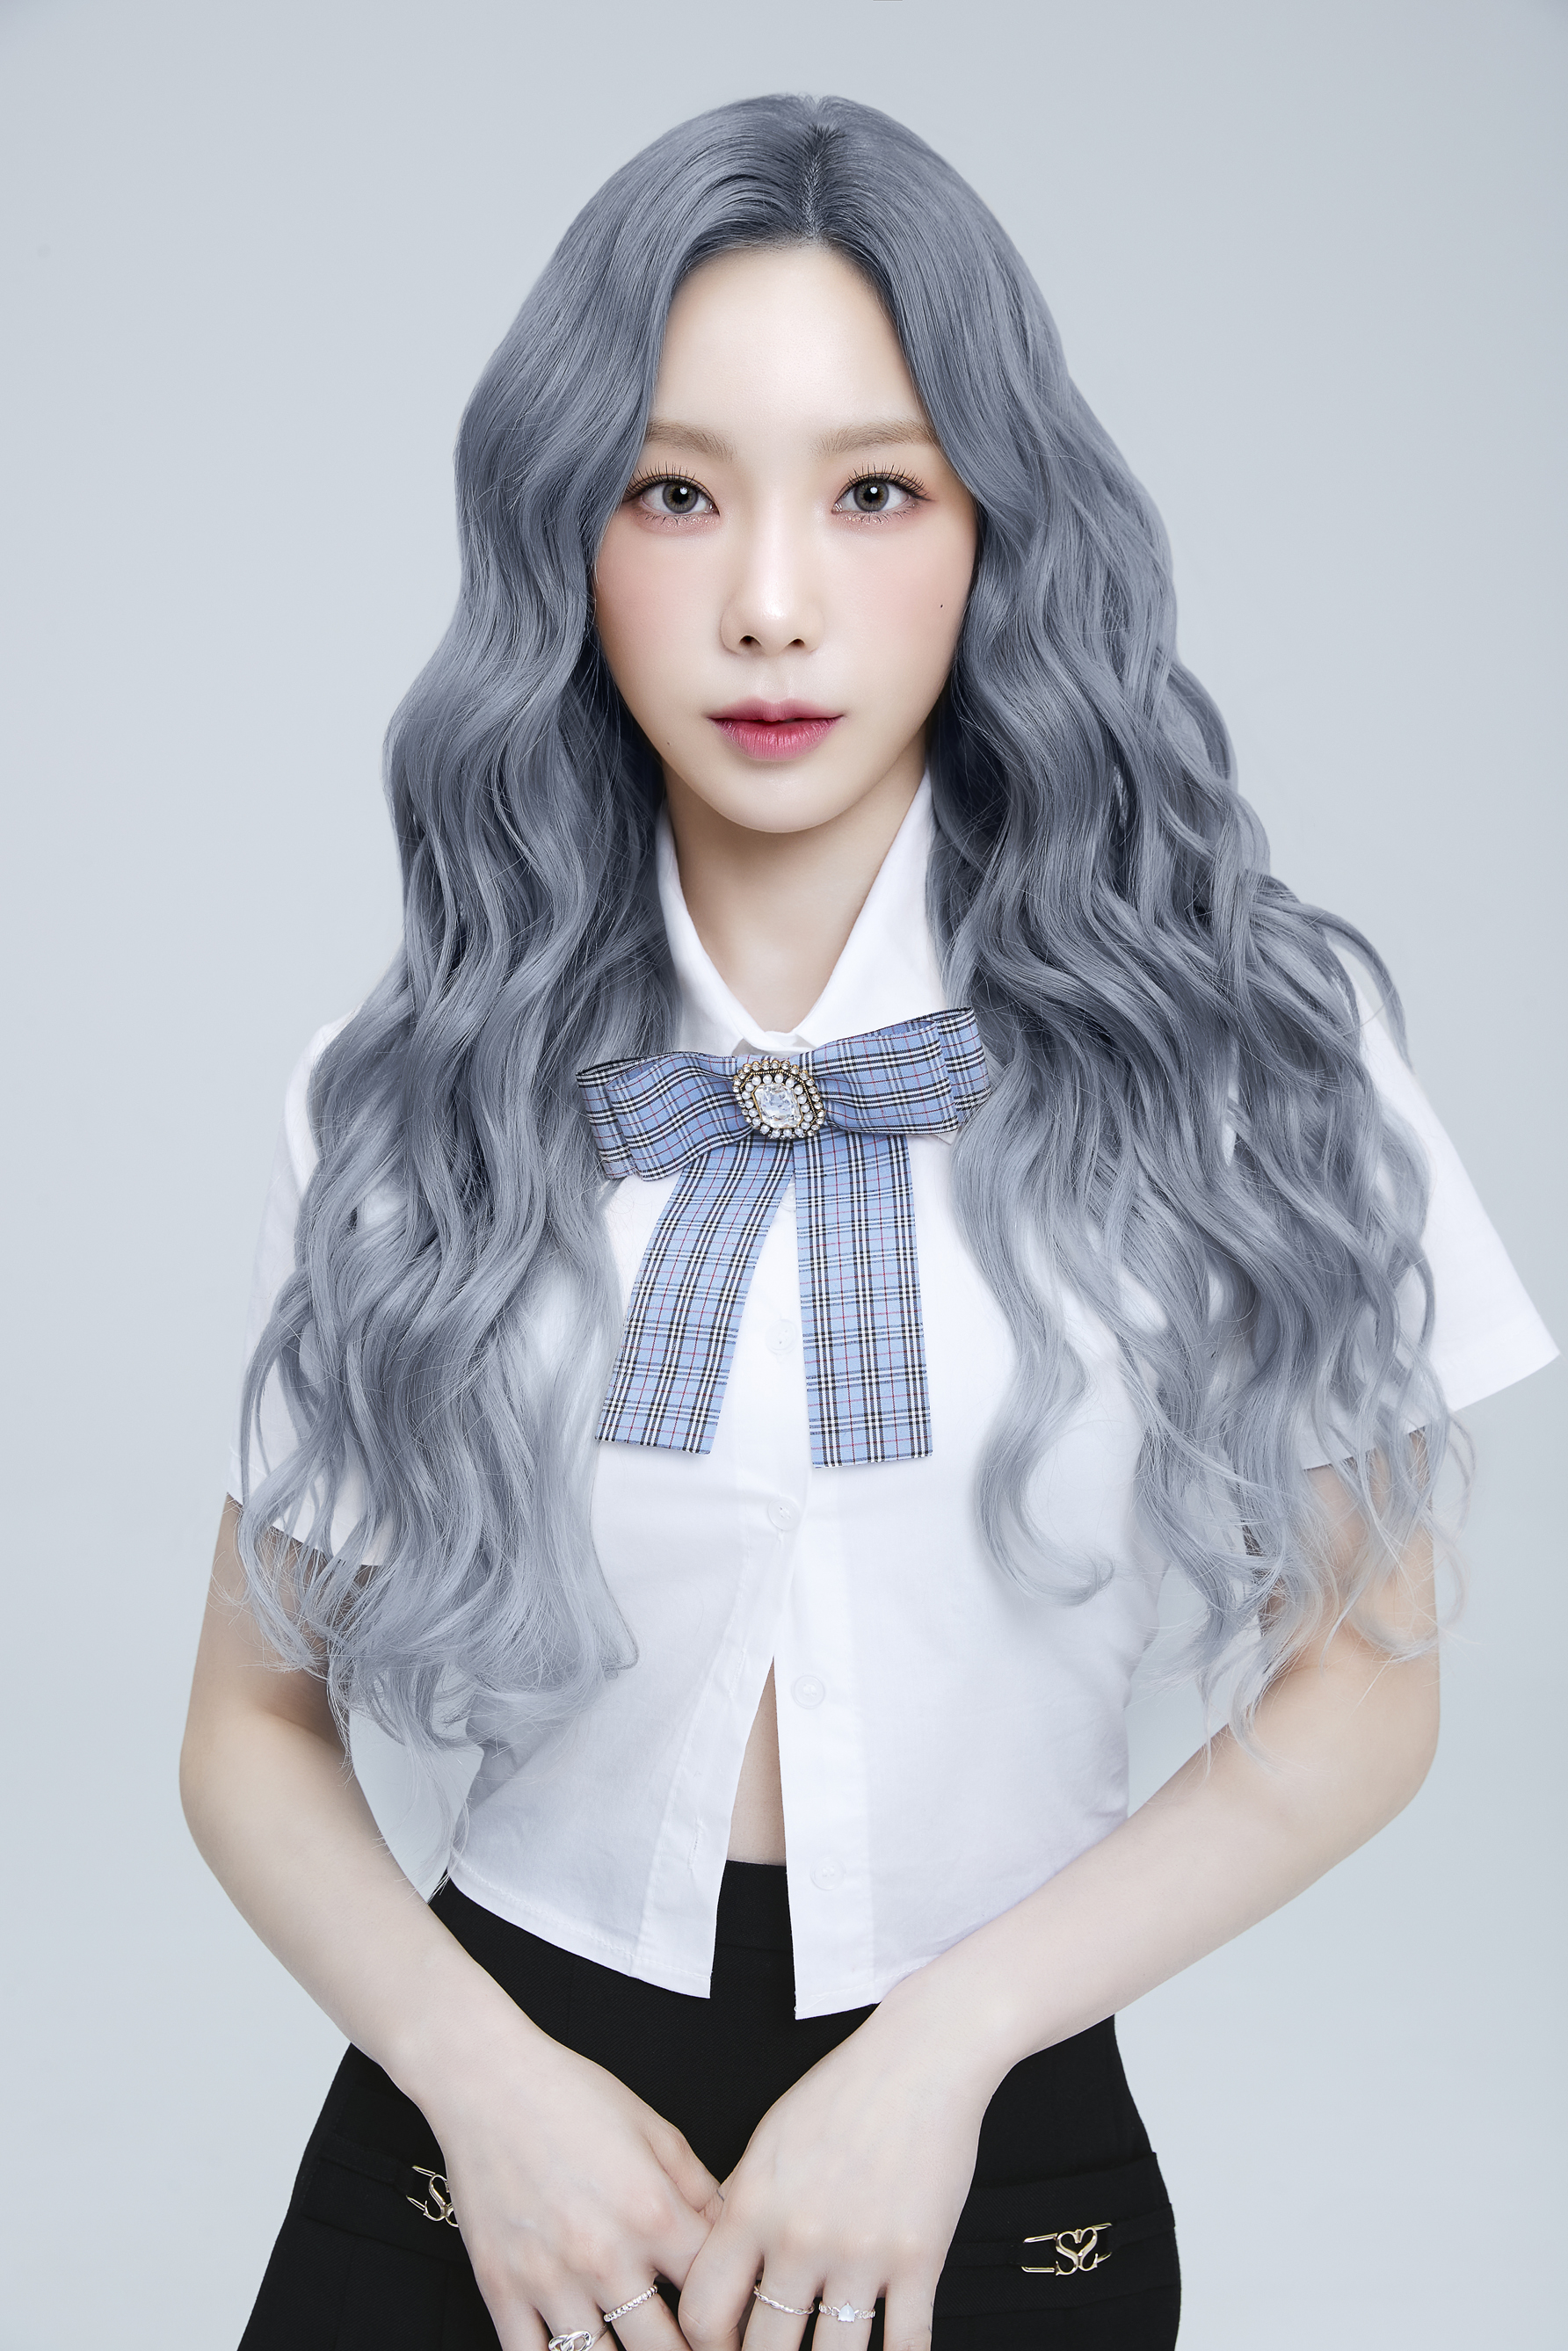 1784x2675 K Pop Kim Taeyeon SNSD Taeyeon Korean Women Model Singer Gray Hair Dyed Hair Contact Lenses Asian Wallpaper Resolution: ID:1287750